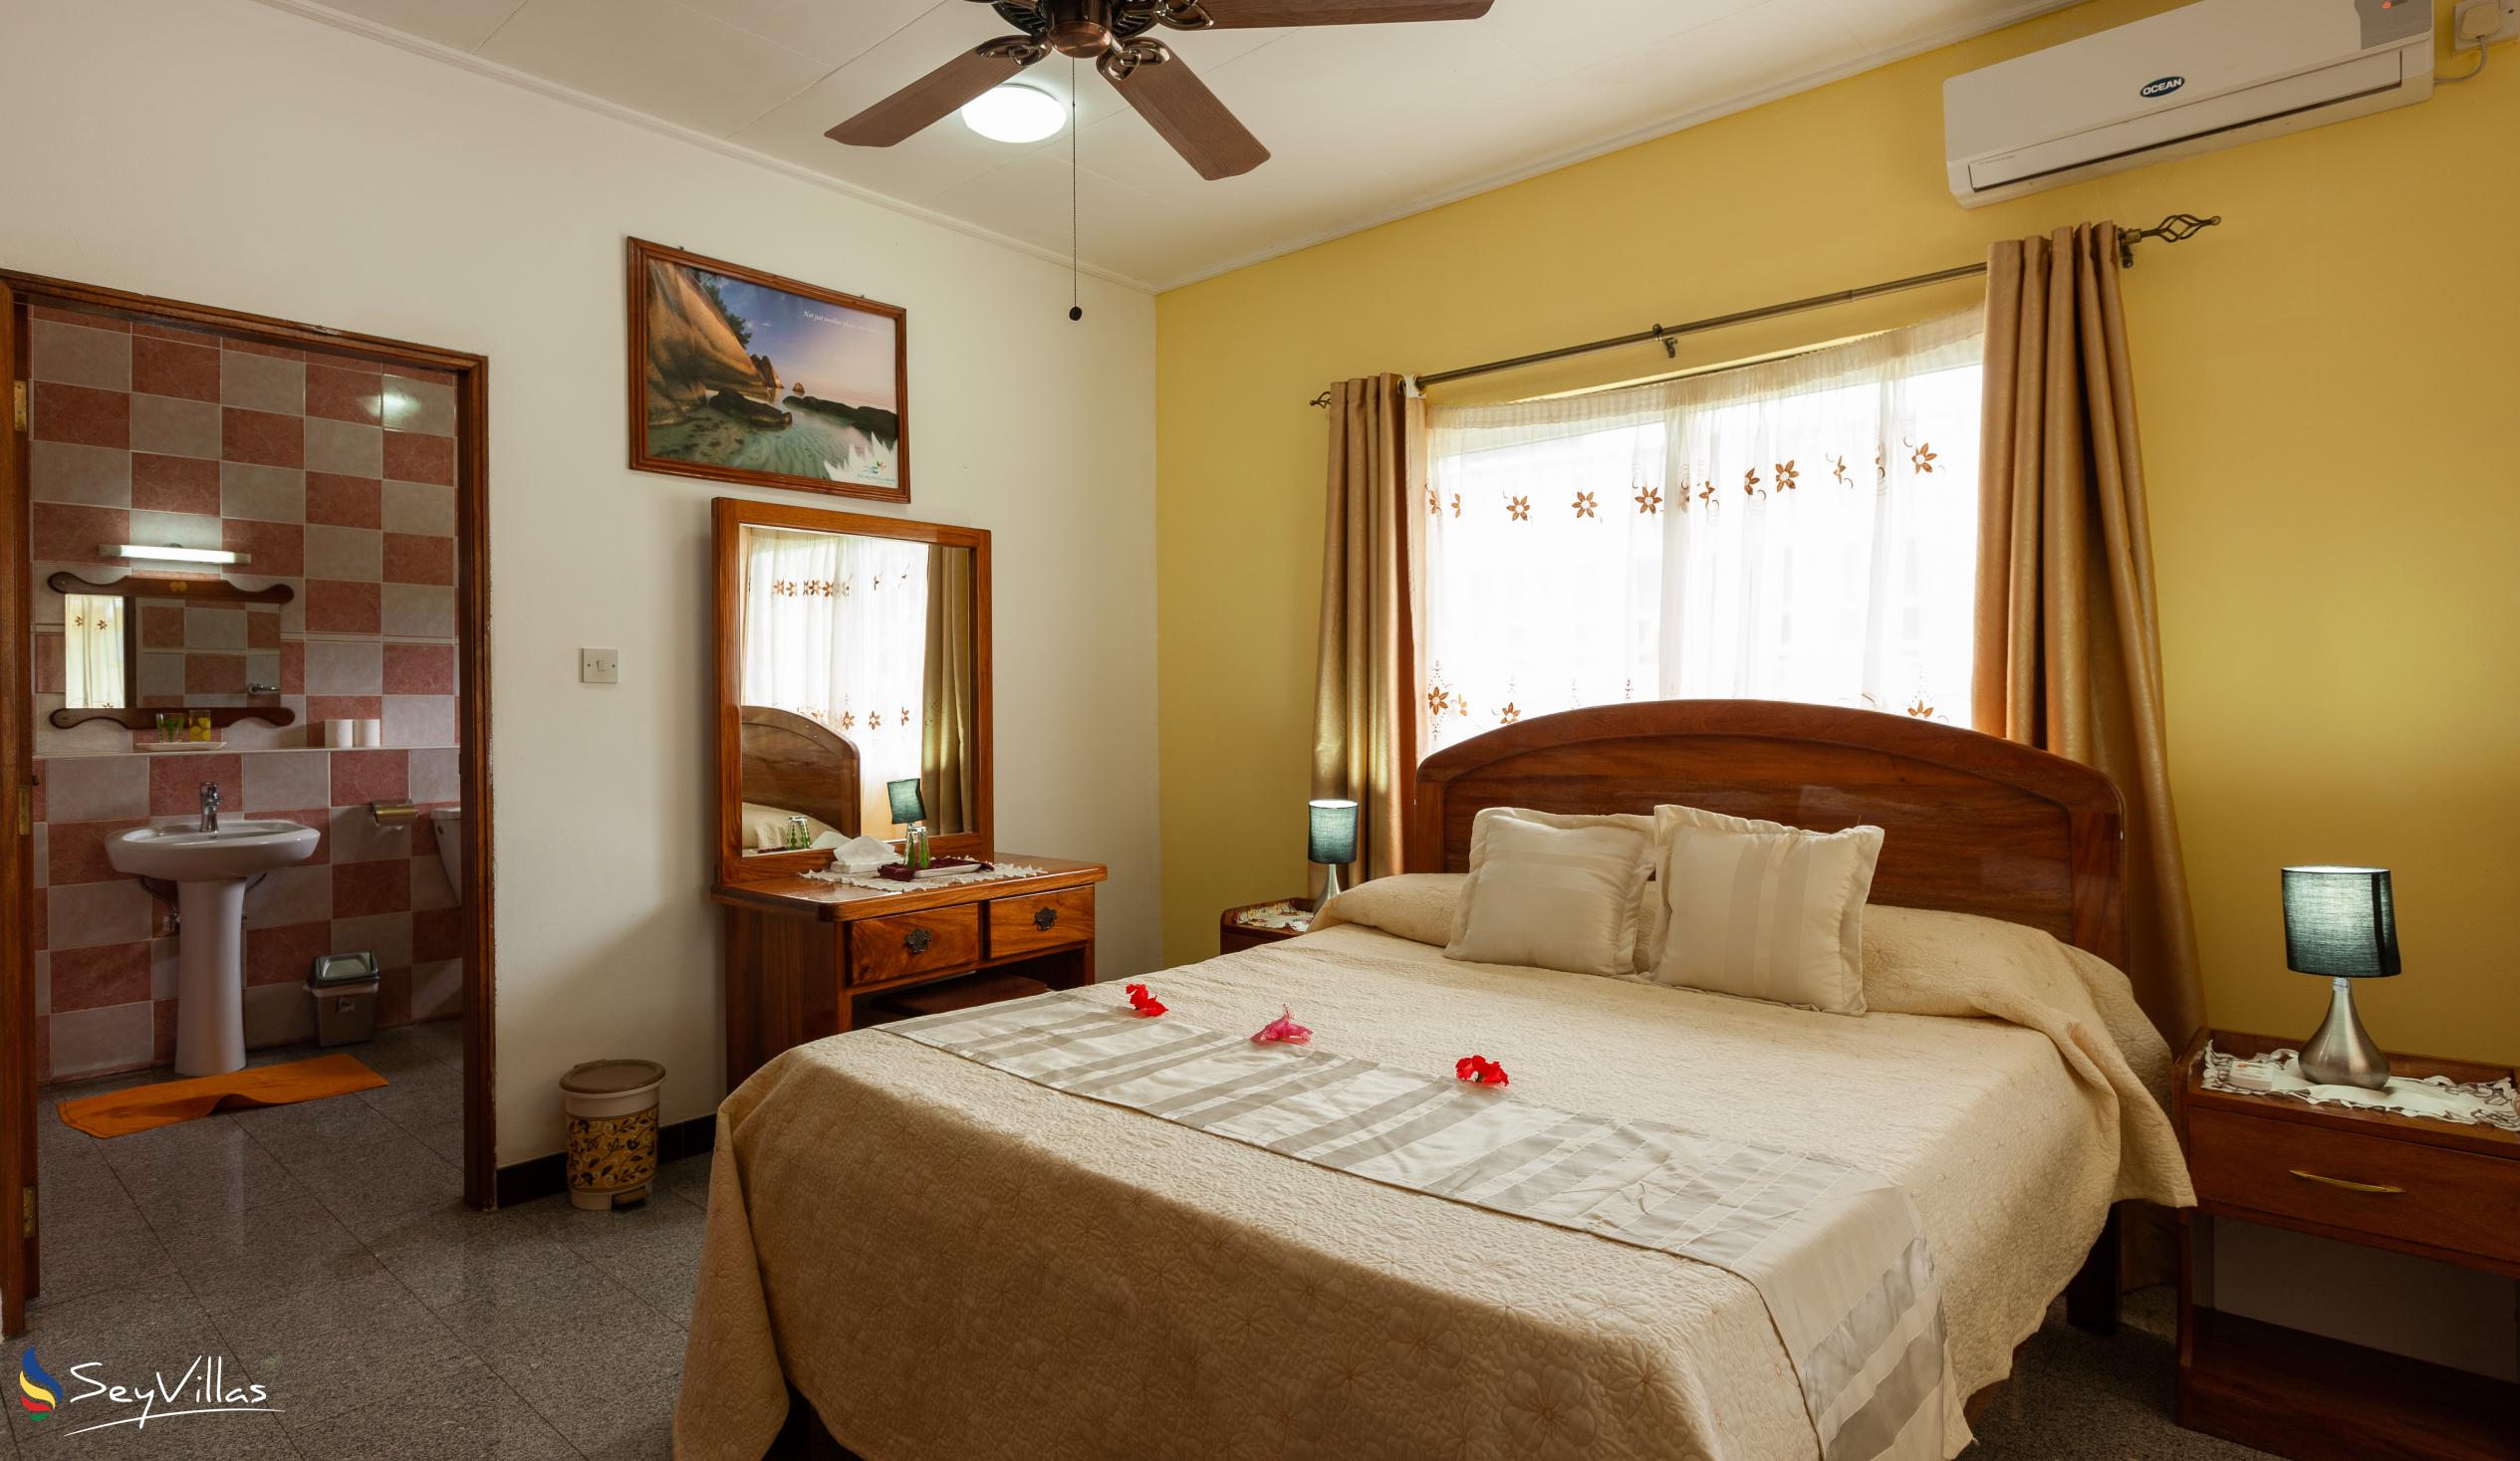 Photo 123: Villa Bananier - Superior Room - Praslin (Seychelles)